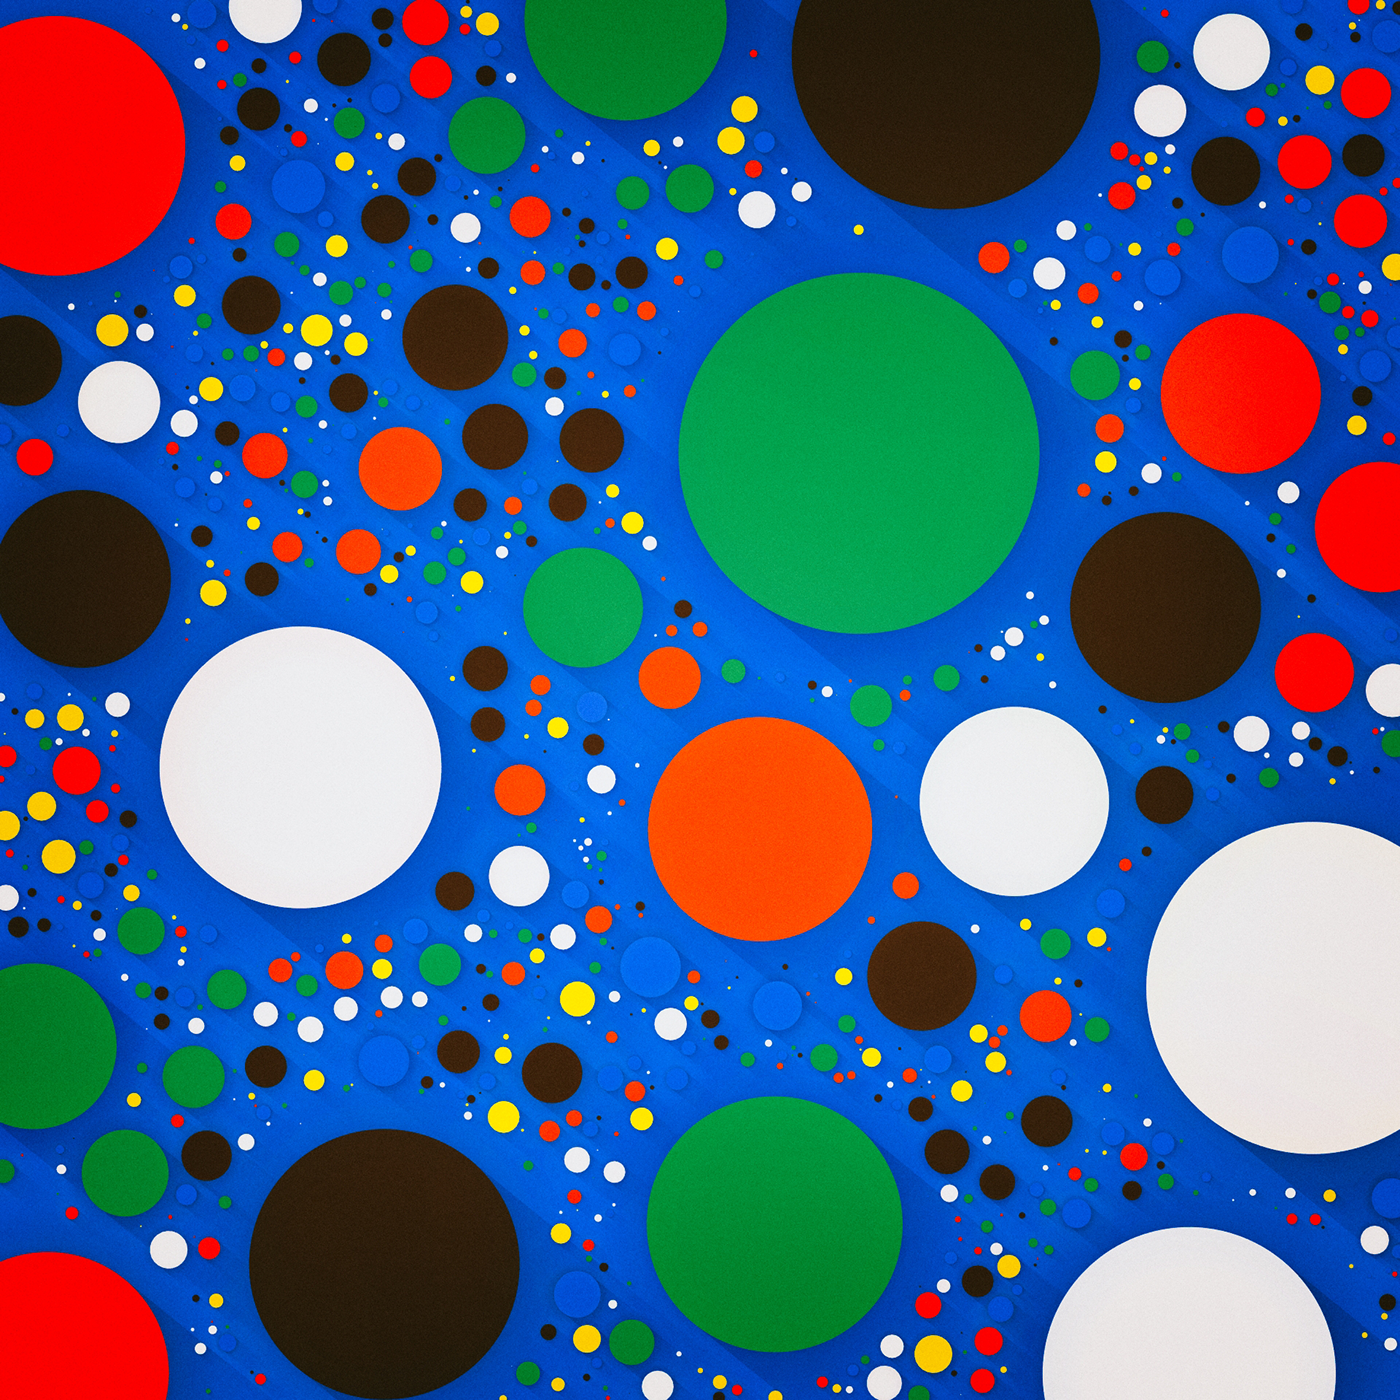 processing generative abstract geometric design art balls